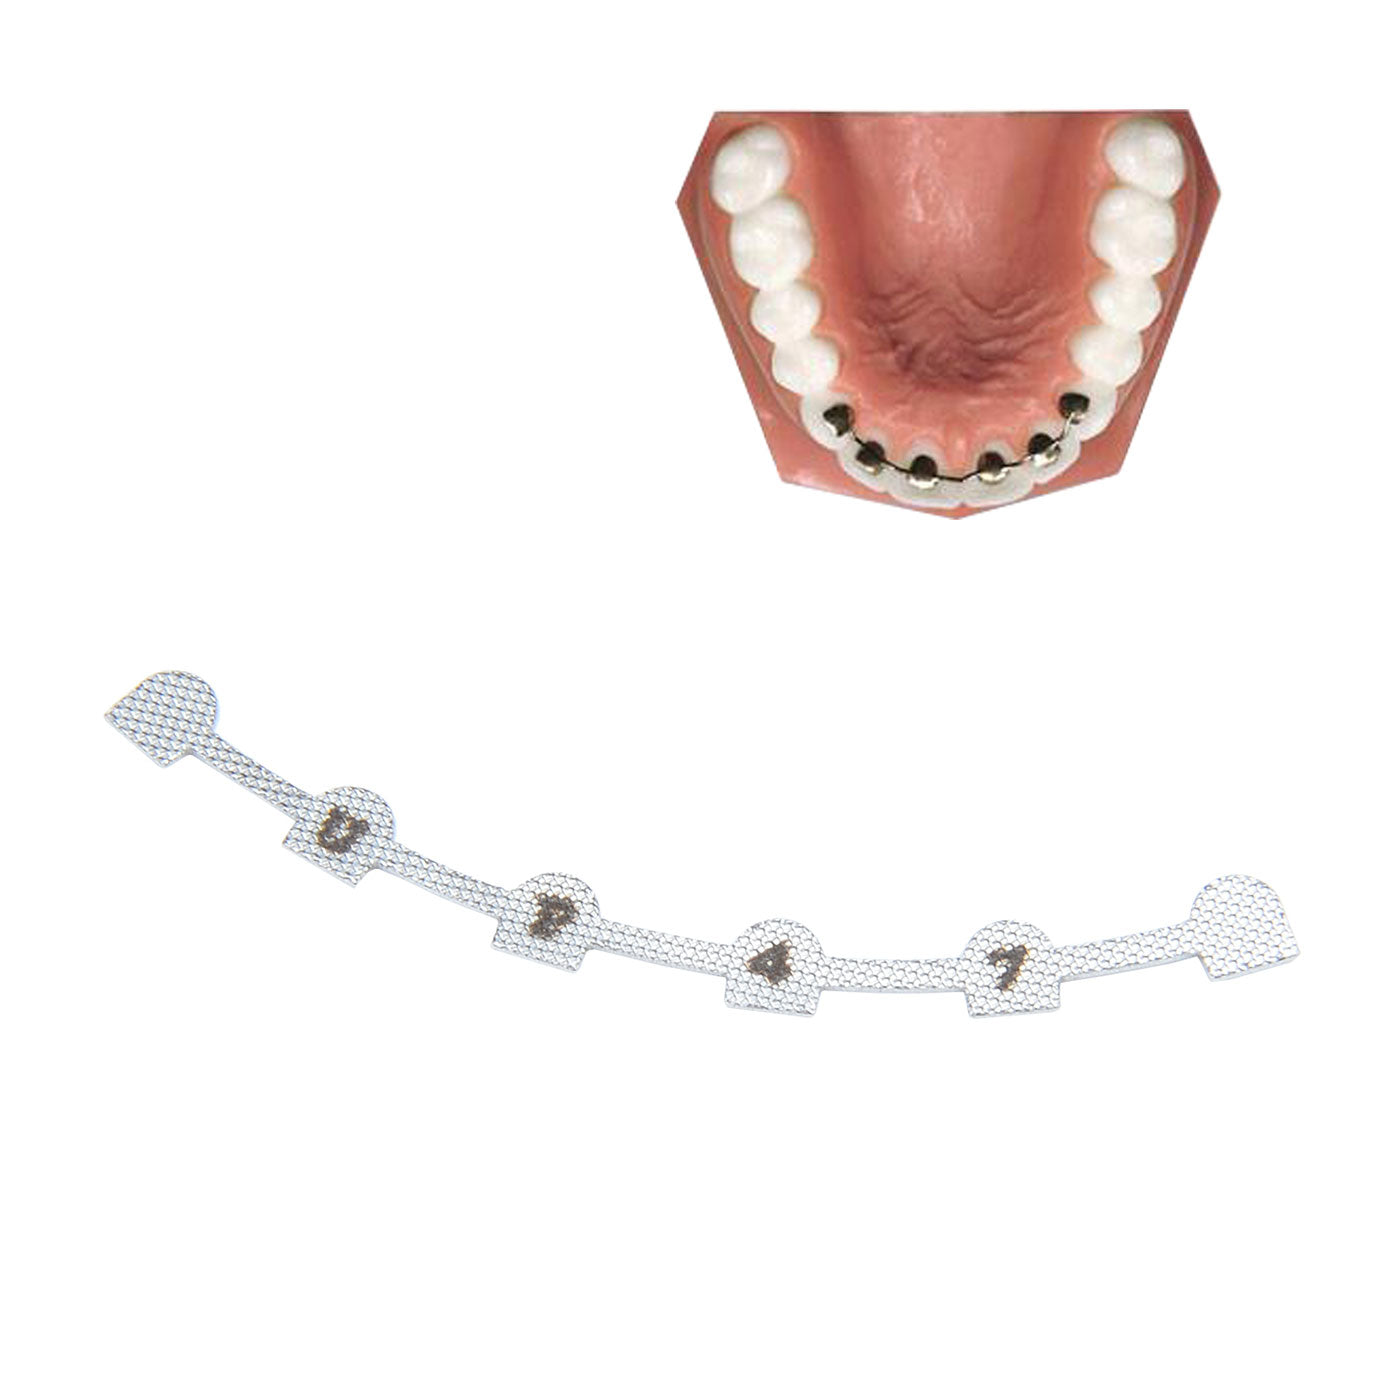 AZDENT Dental Lingual Retainer Bonding Splits U#38-47 & L#29-37 With Mark 10pcs/Bag - azdentall.com